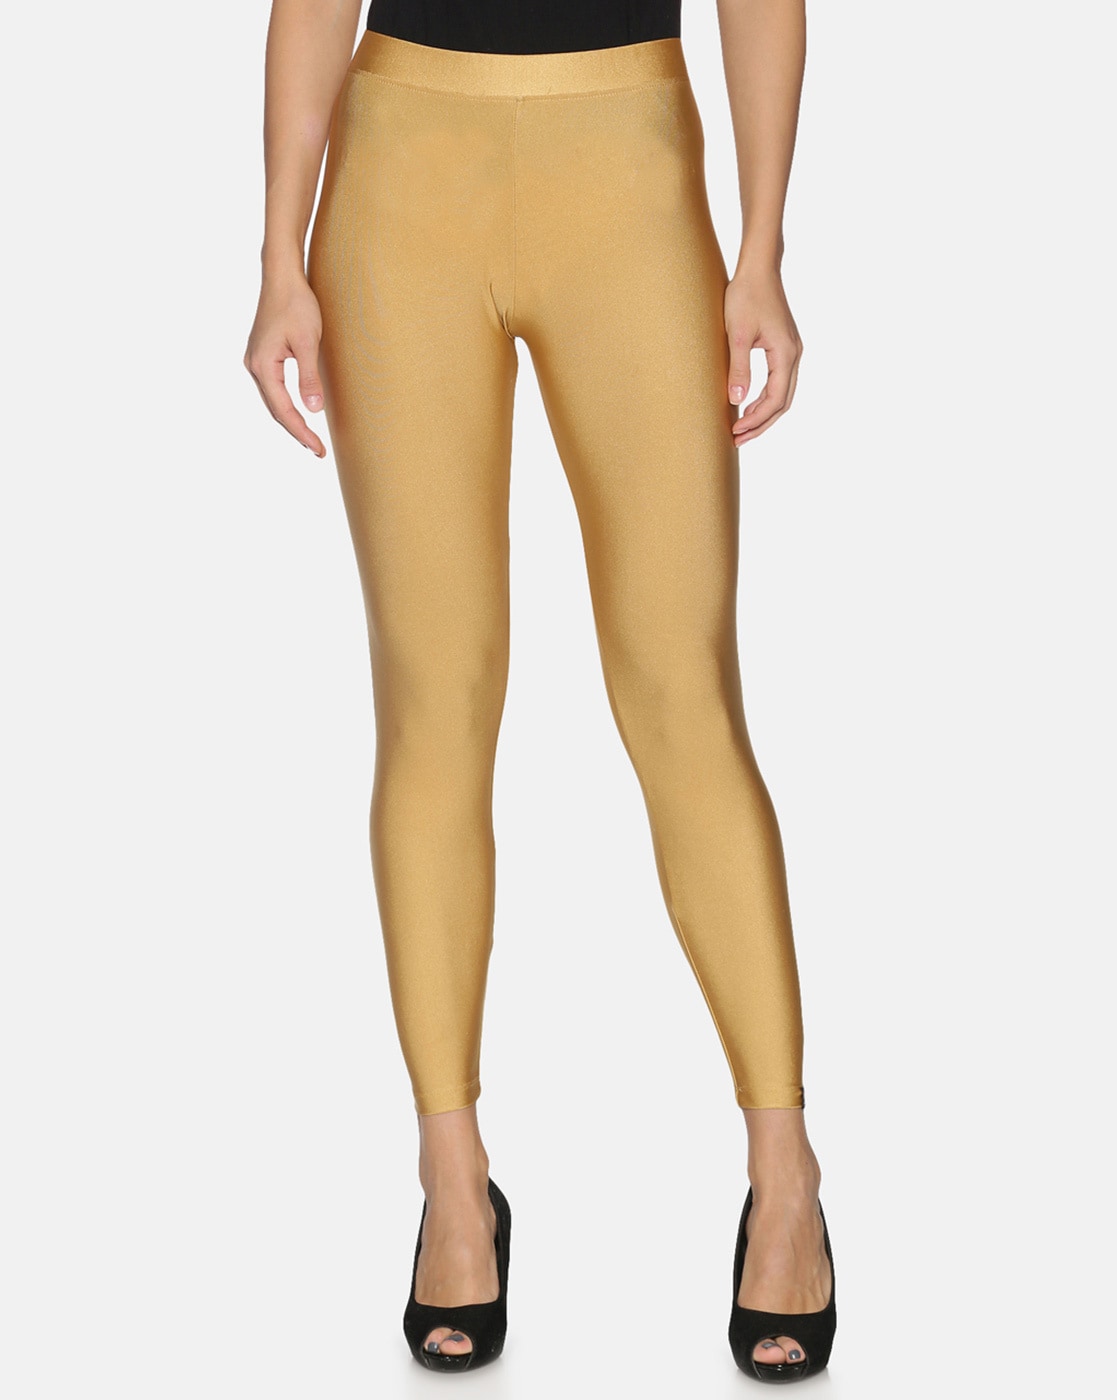 Update more than 146 golden colour leggings